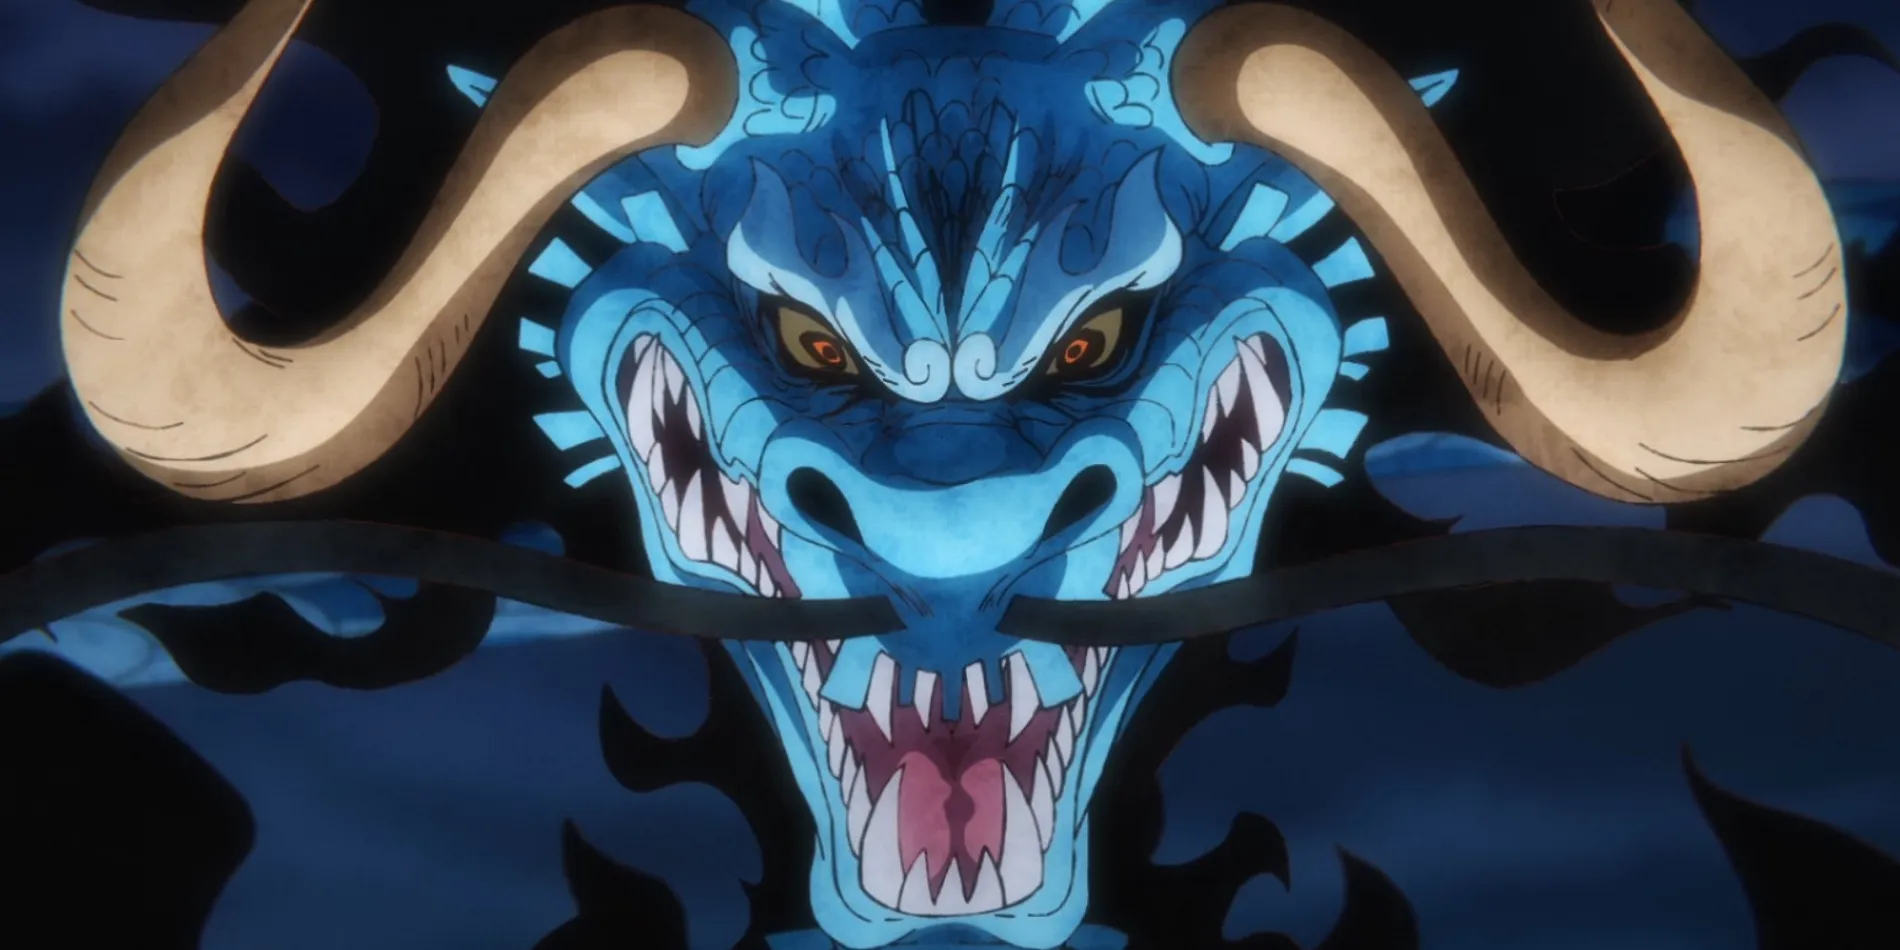 Kaido’s dragon form